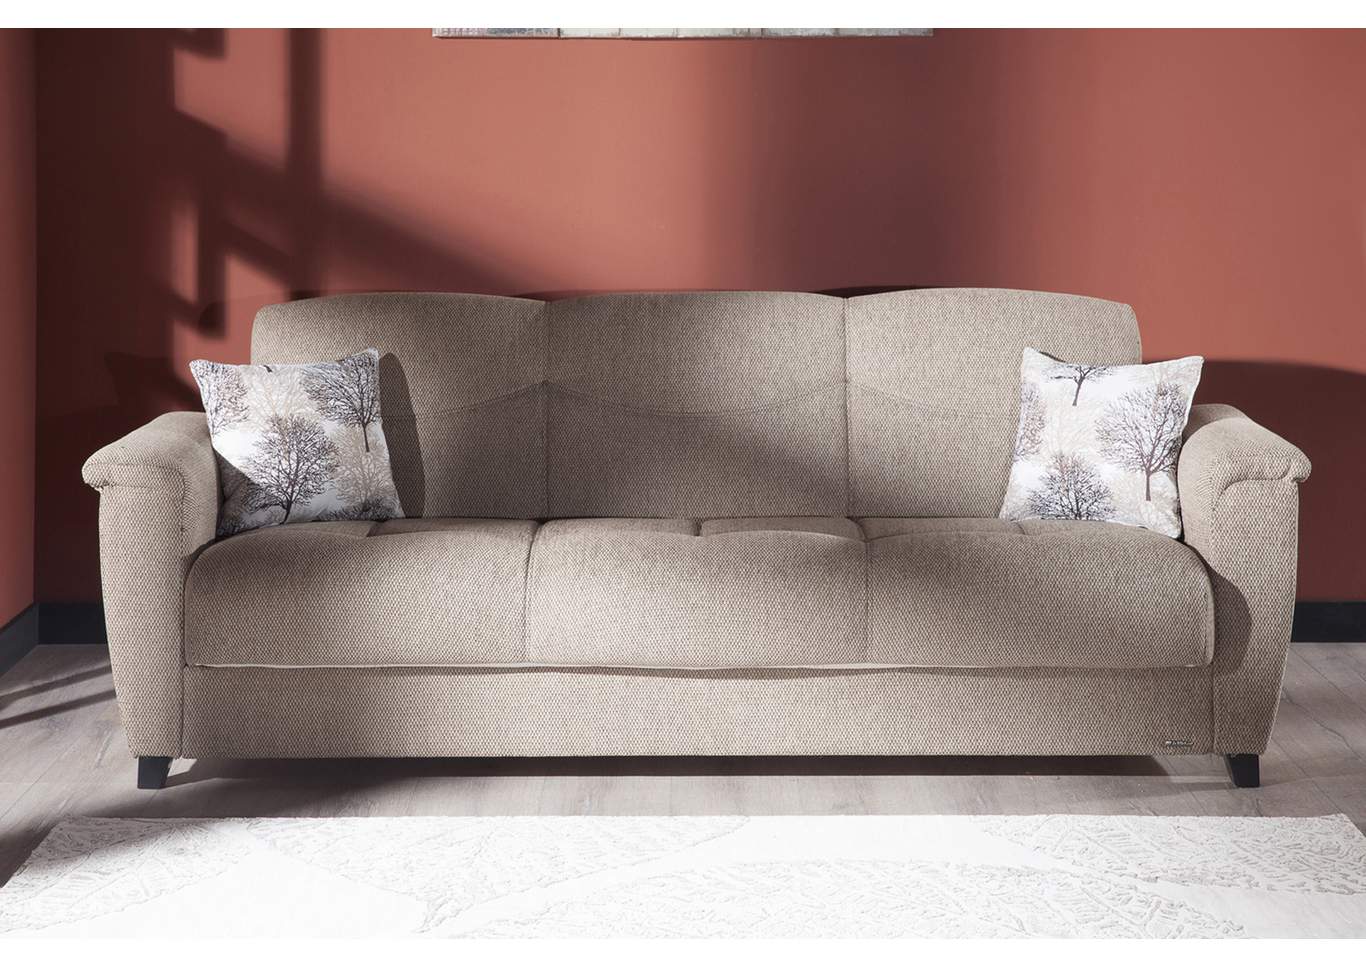 Aspen Aristo Light Brown 3 Seat Sleeper Sofa W/ Storage,Hudson Furniture & Bedding